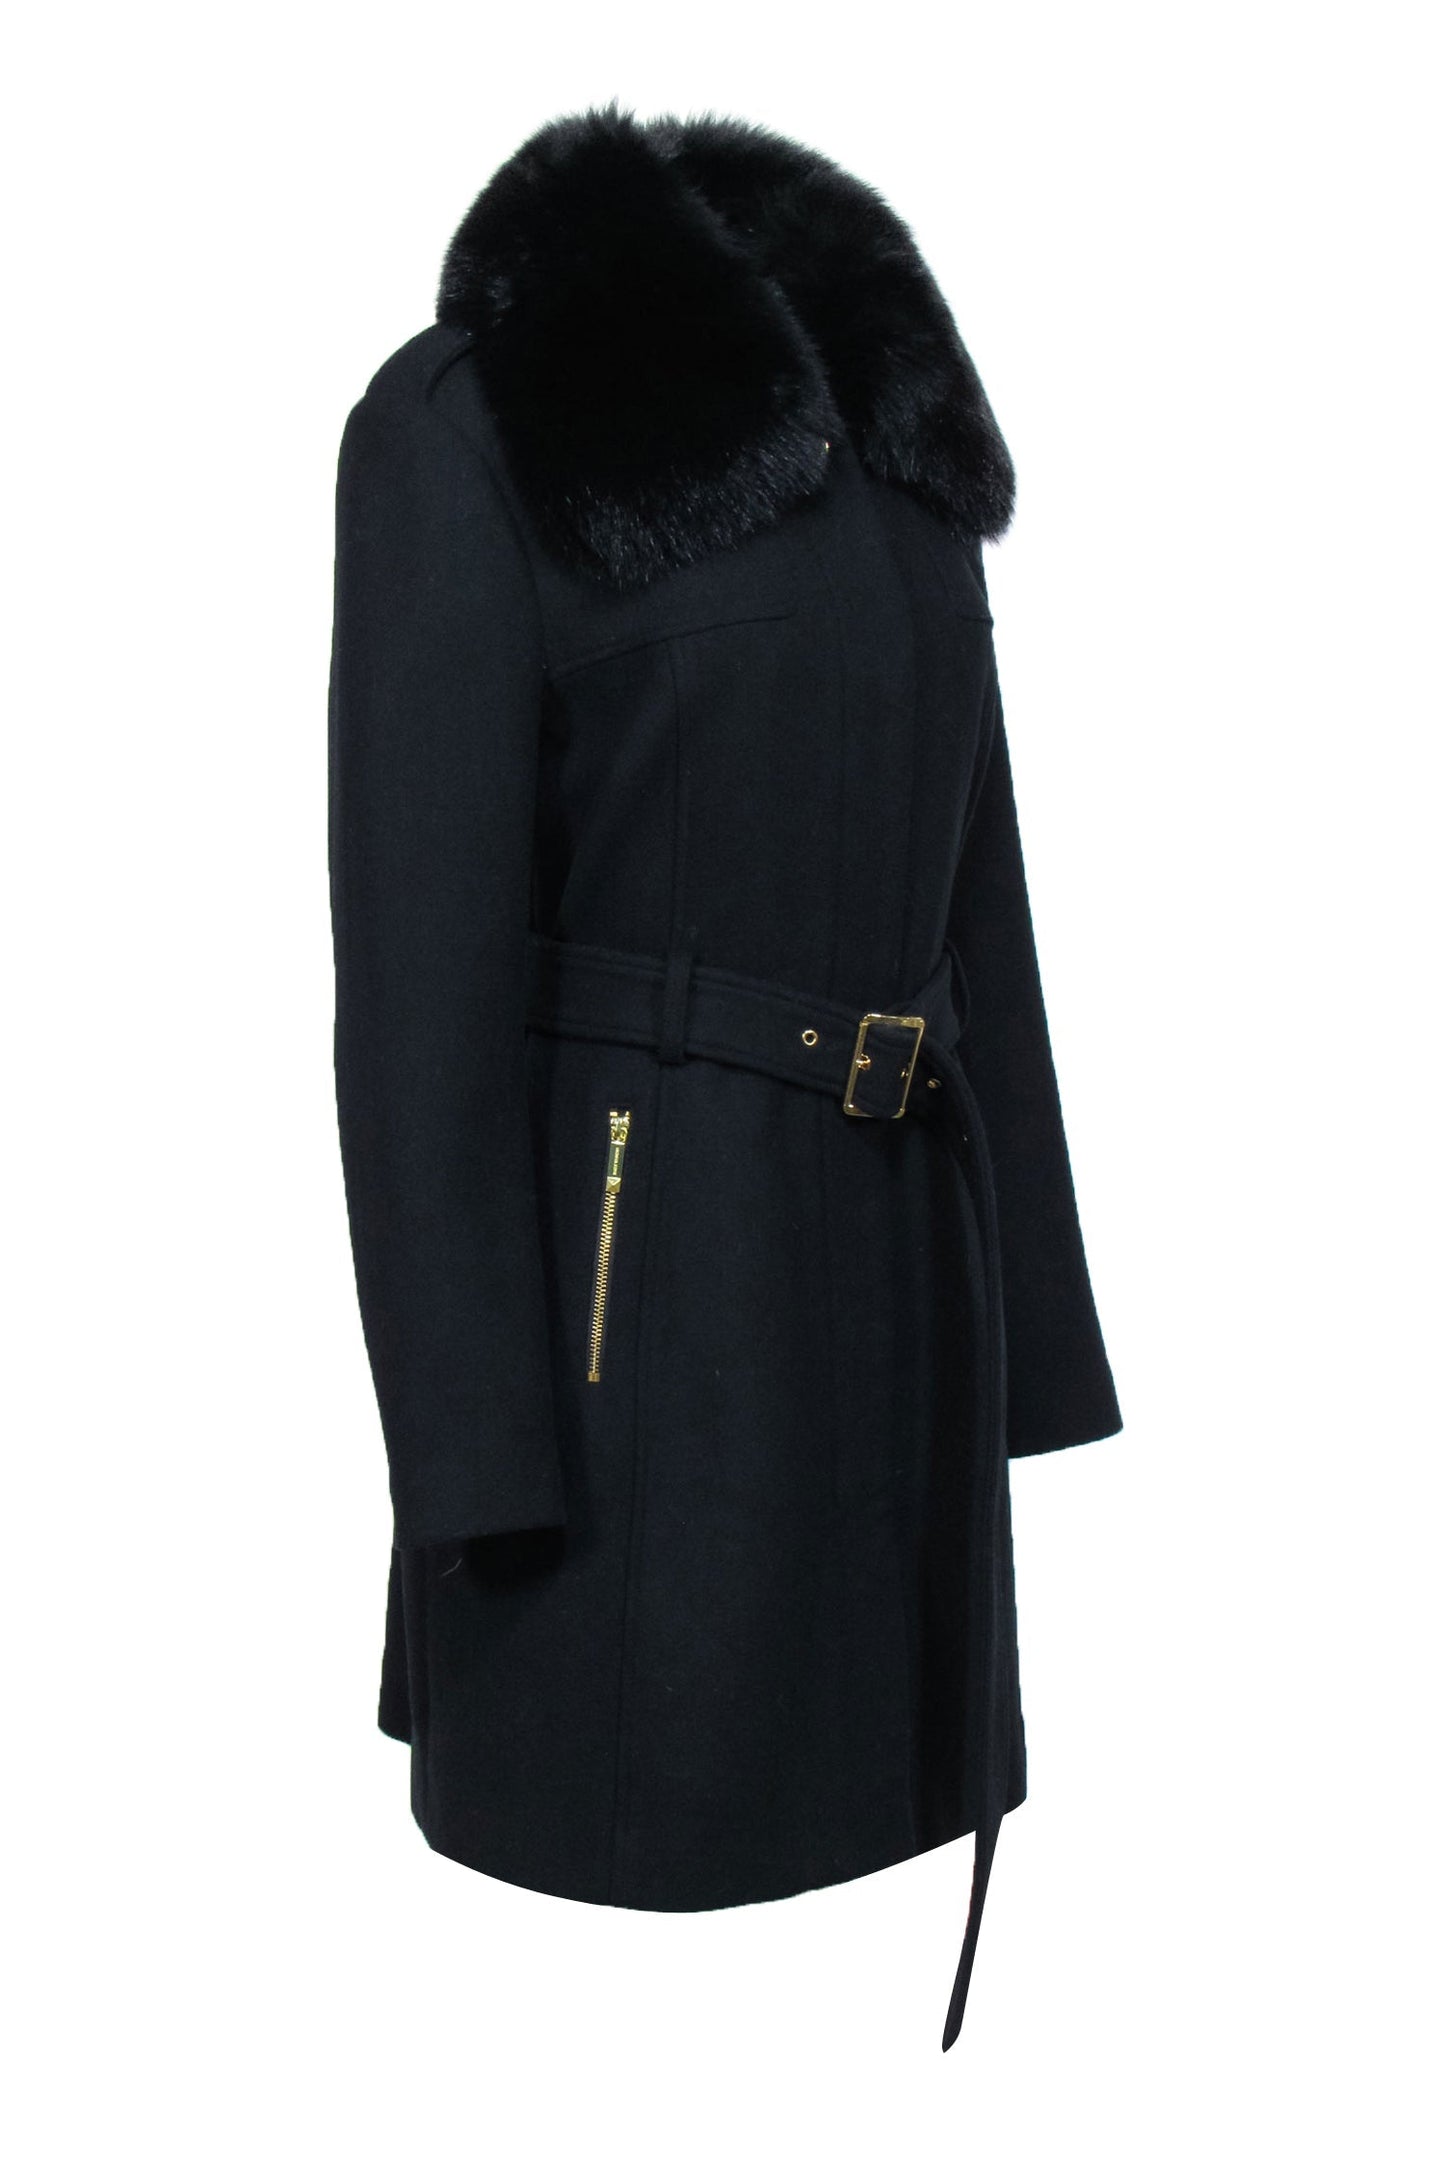 Michael Michael Kors - Black Wool Blend Coat w/ Fox Fur Collar Sz 16